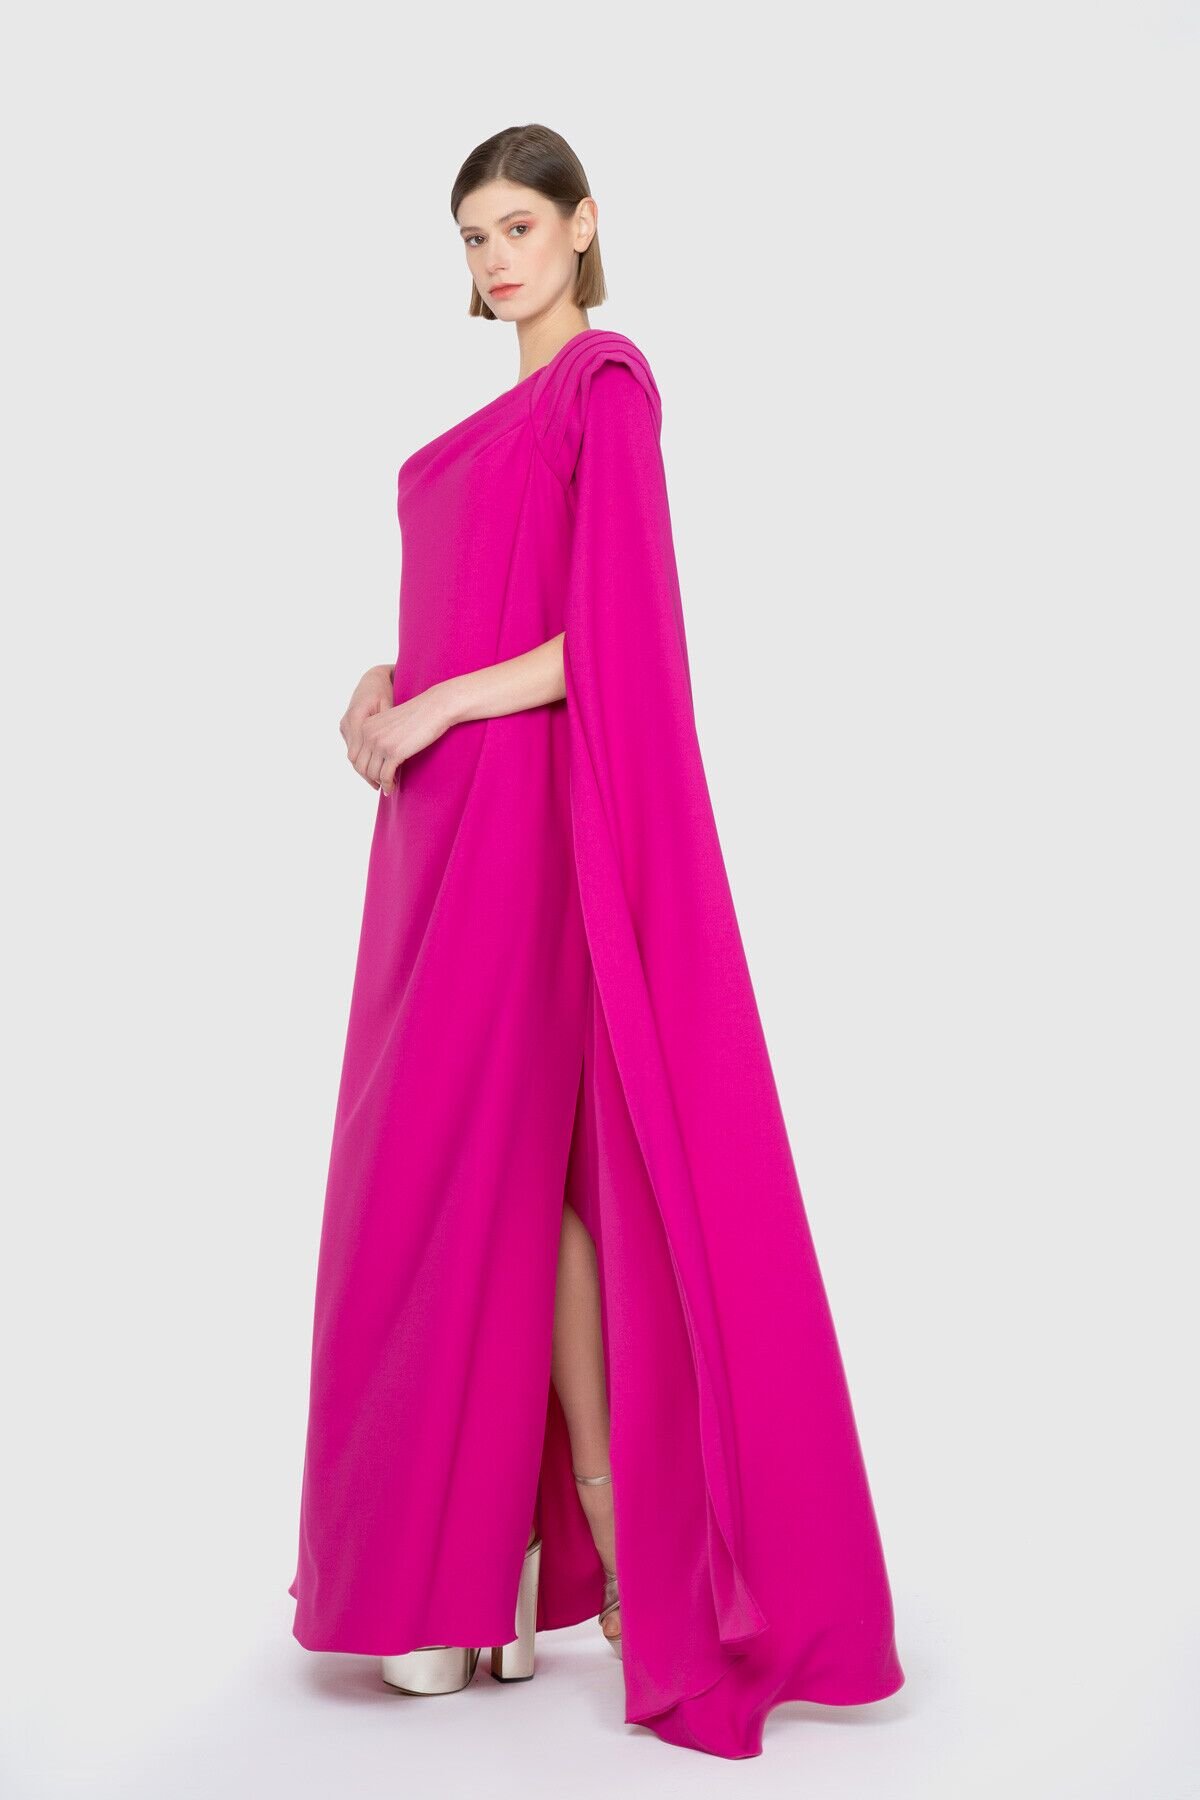 One-Shoulder Cape Look Long Pink Evening Dress